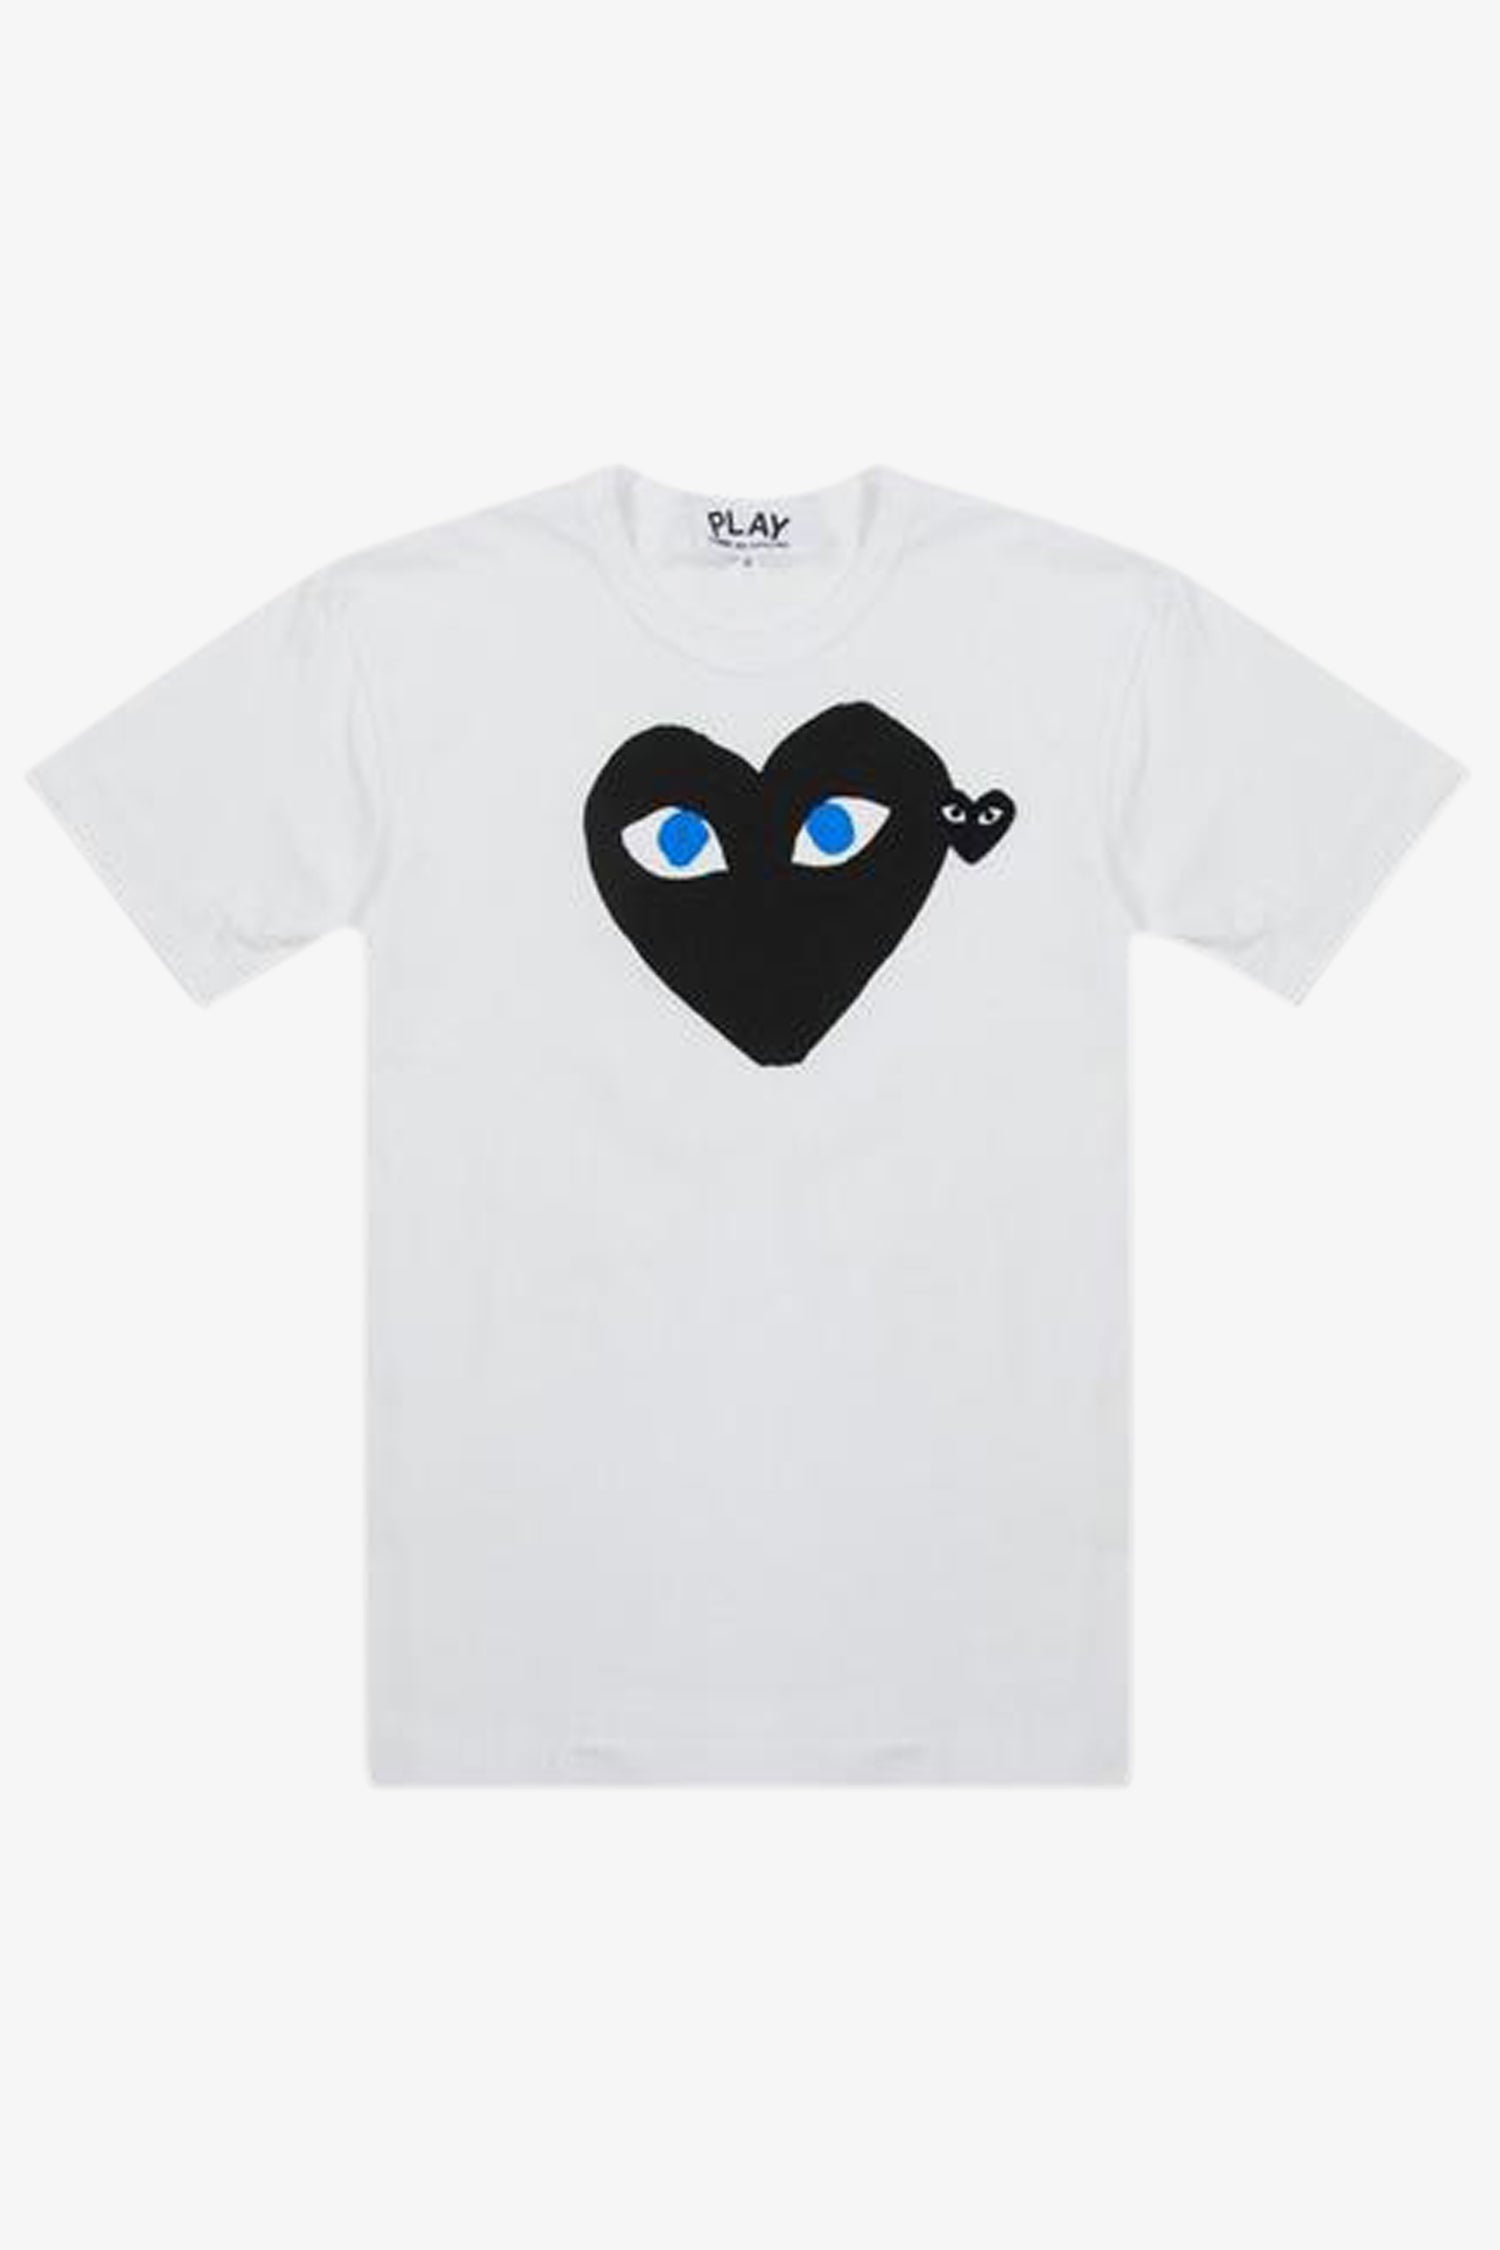 Selectshop FRAME - COMME DES GARCONS PLAY Big Black Heart Blue Eyes T-Shirt T-Shirt Dubai